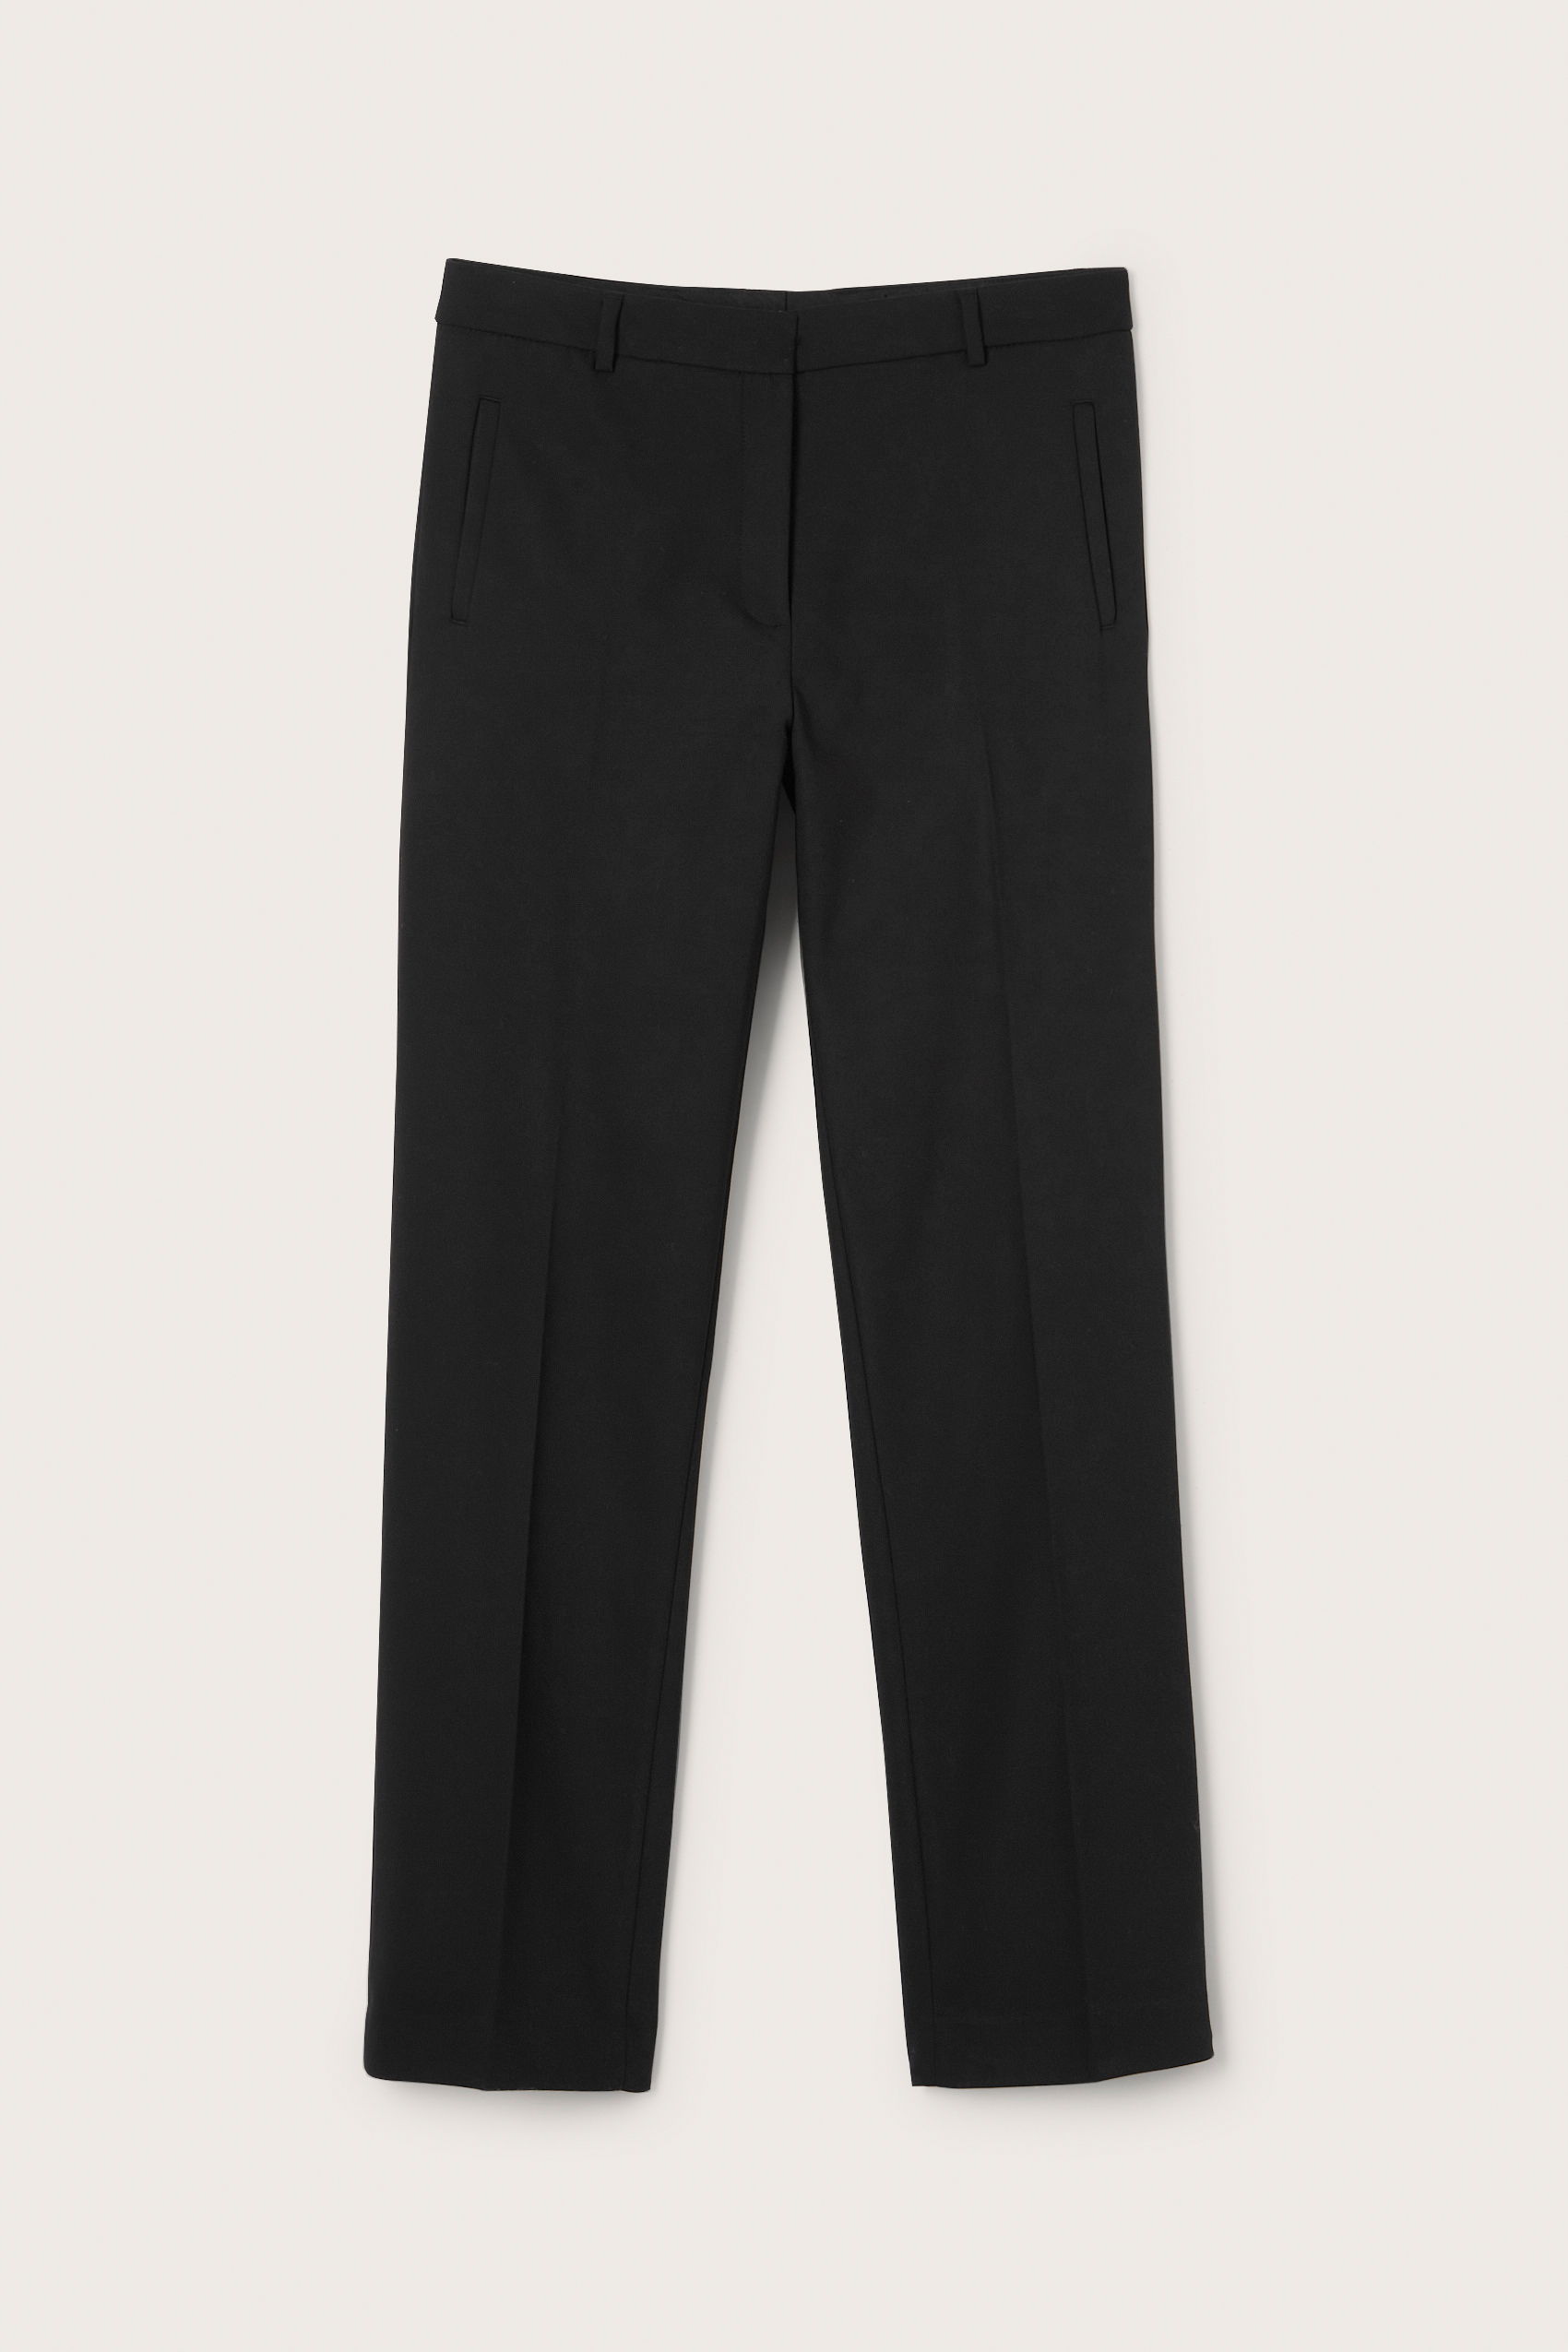 Stockh lm Desi Straight Trousers Black | MQ Marqet